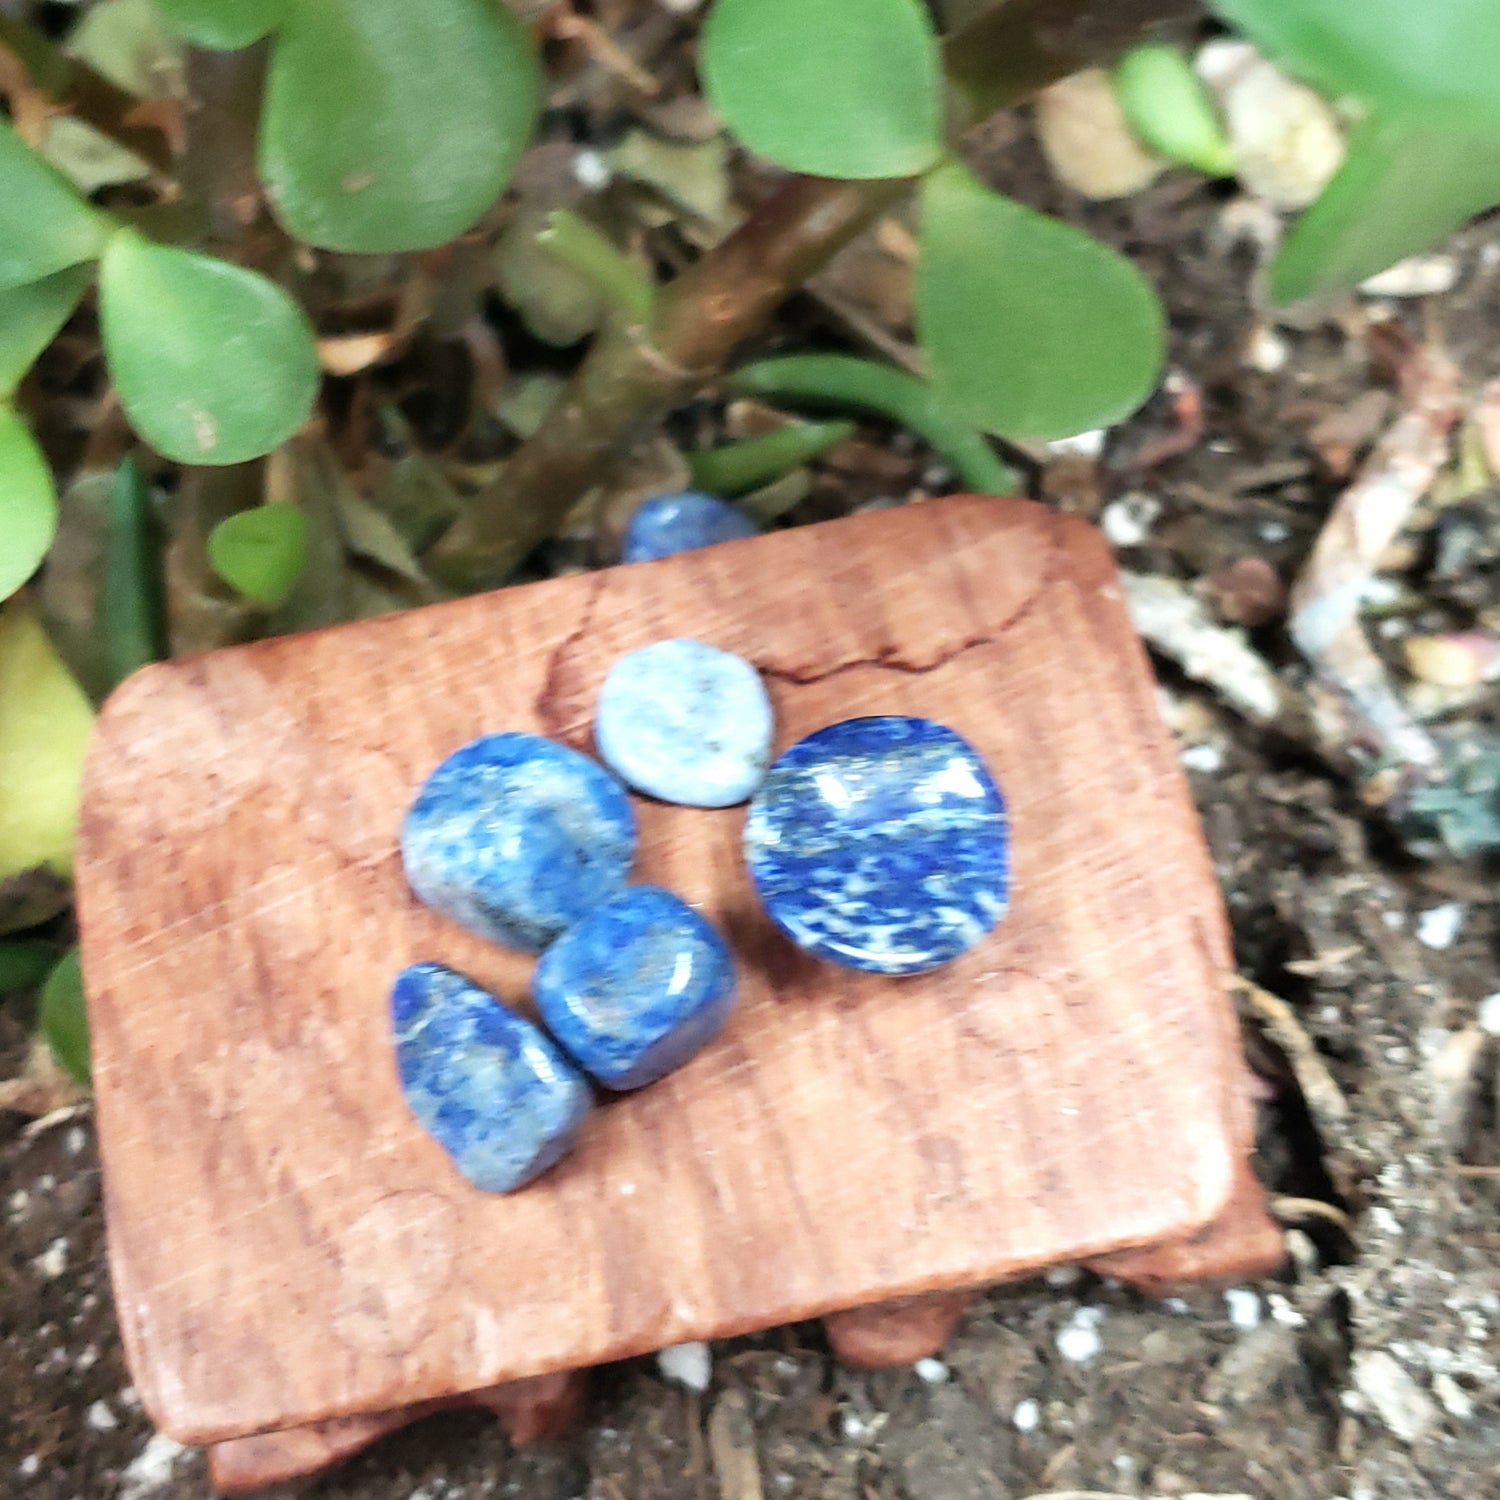 Lapis Lazuli Chips - Elevated Metaphysical